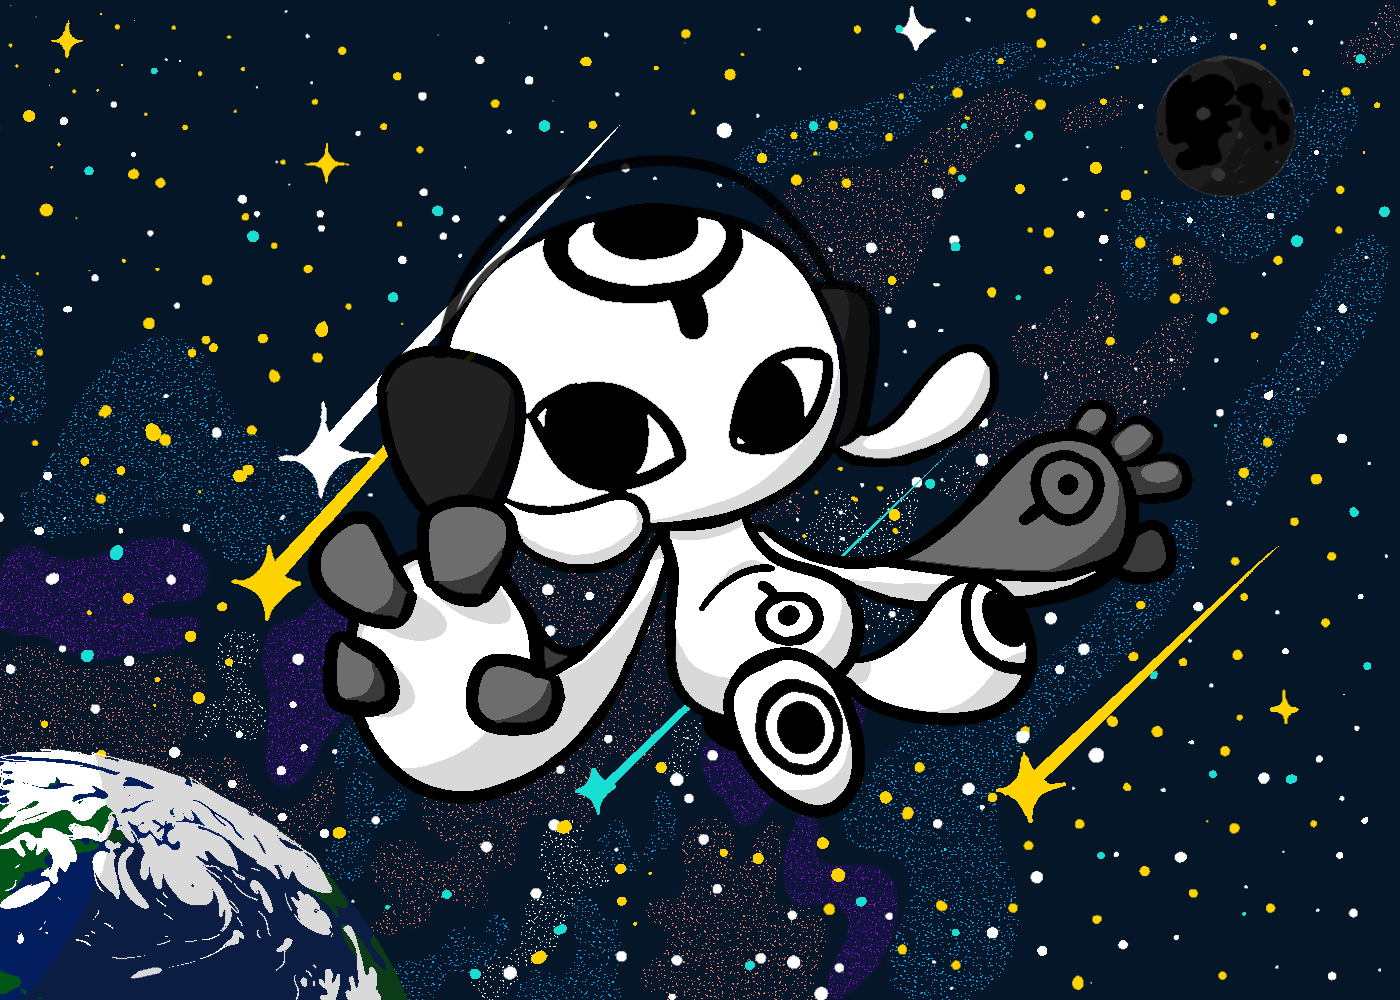 cyo in space